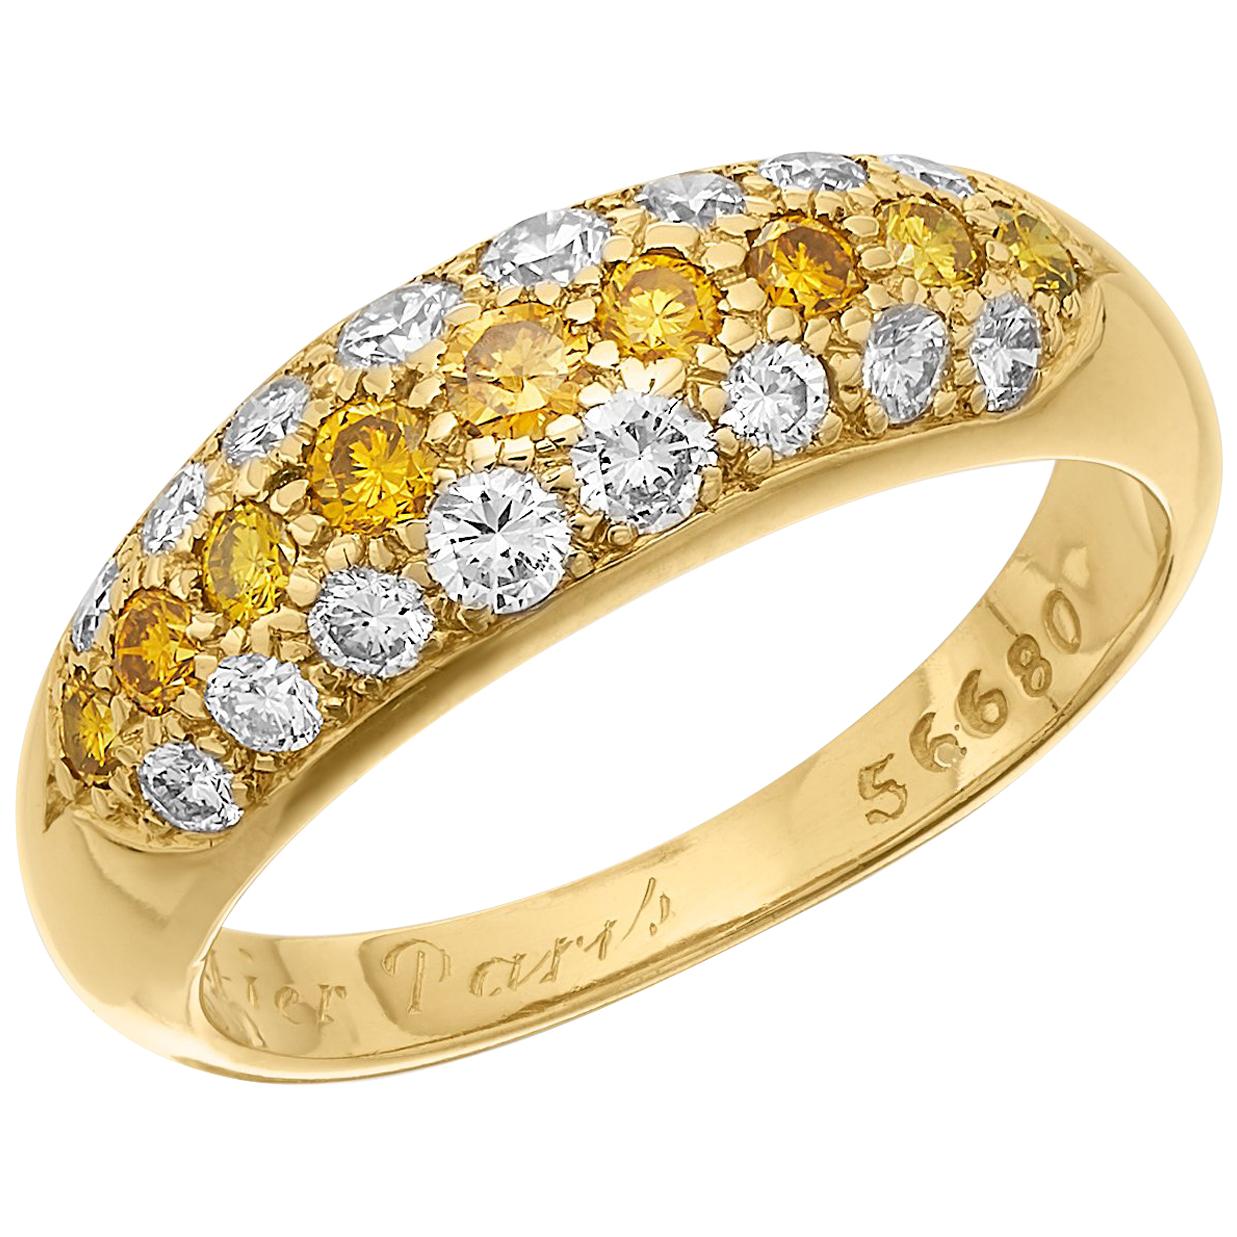 Cartier French Etincelle, White & Vivid Yellow Diamond 3 row Bombe Hoop Ring